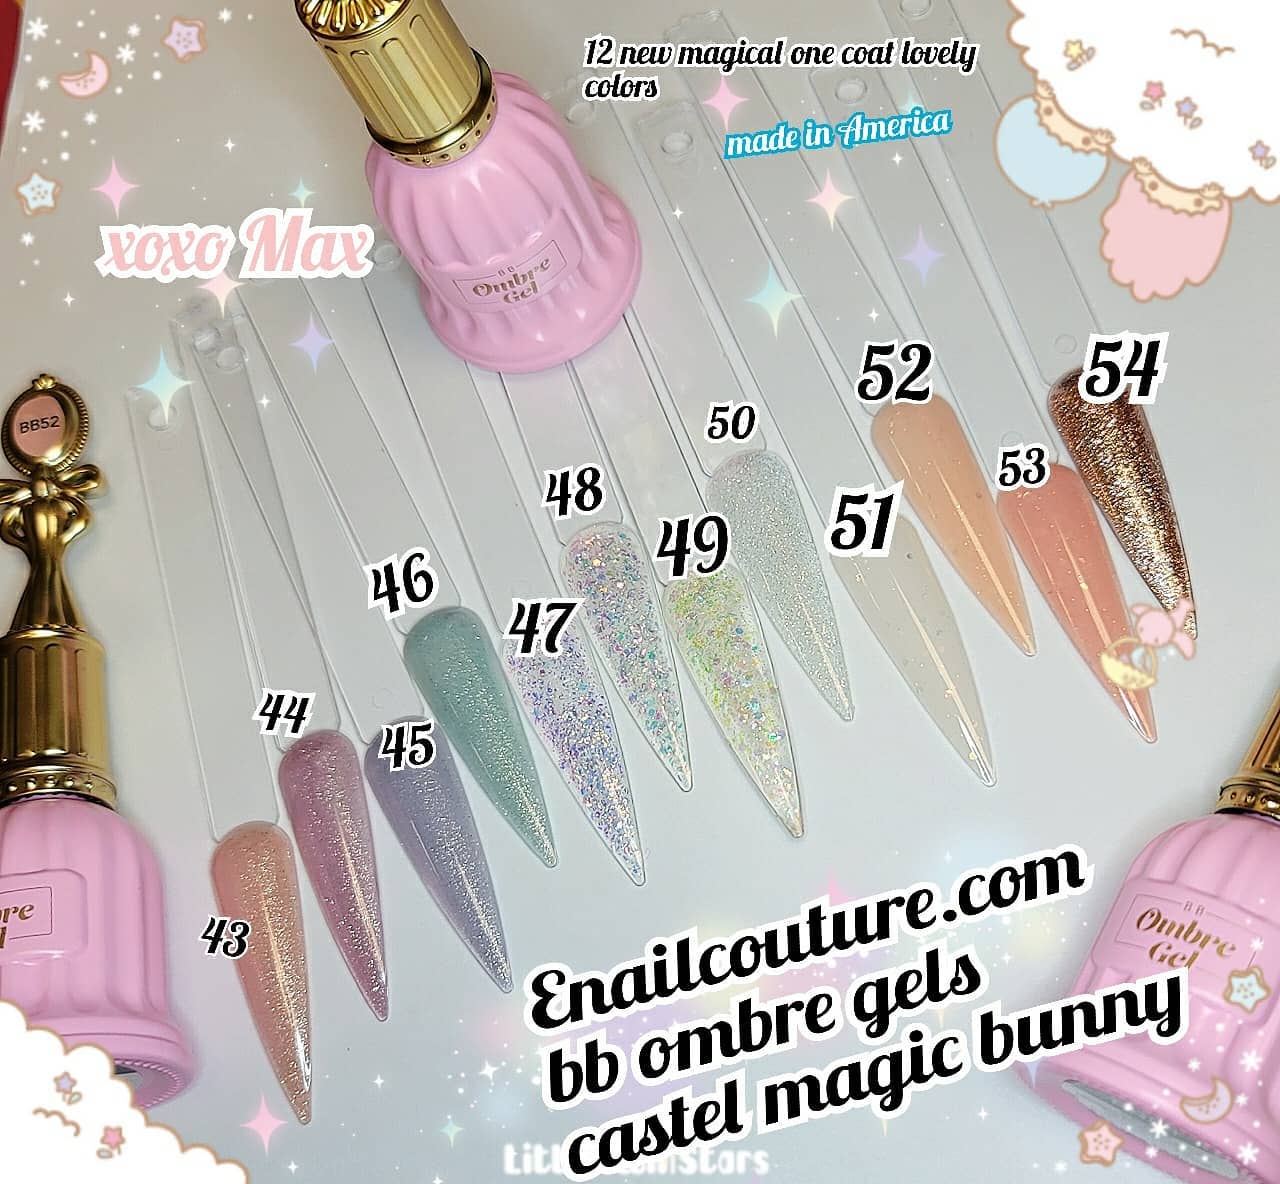 castel bunny magic, bb ombre gel (Pink Confetti Gel Nail Polish- 12 Colors Nude Pink Series Gel Polish Glitter Set, Soak Off Nail Lamp Cured Gel Polish nude Nail Varnish Manicure, Nail Art)